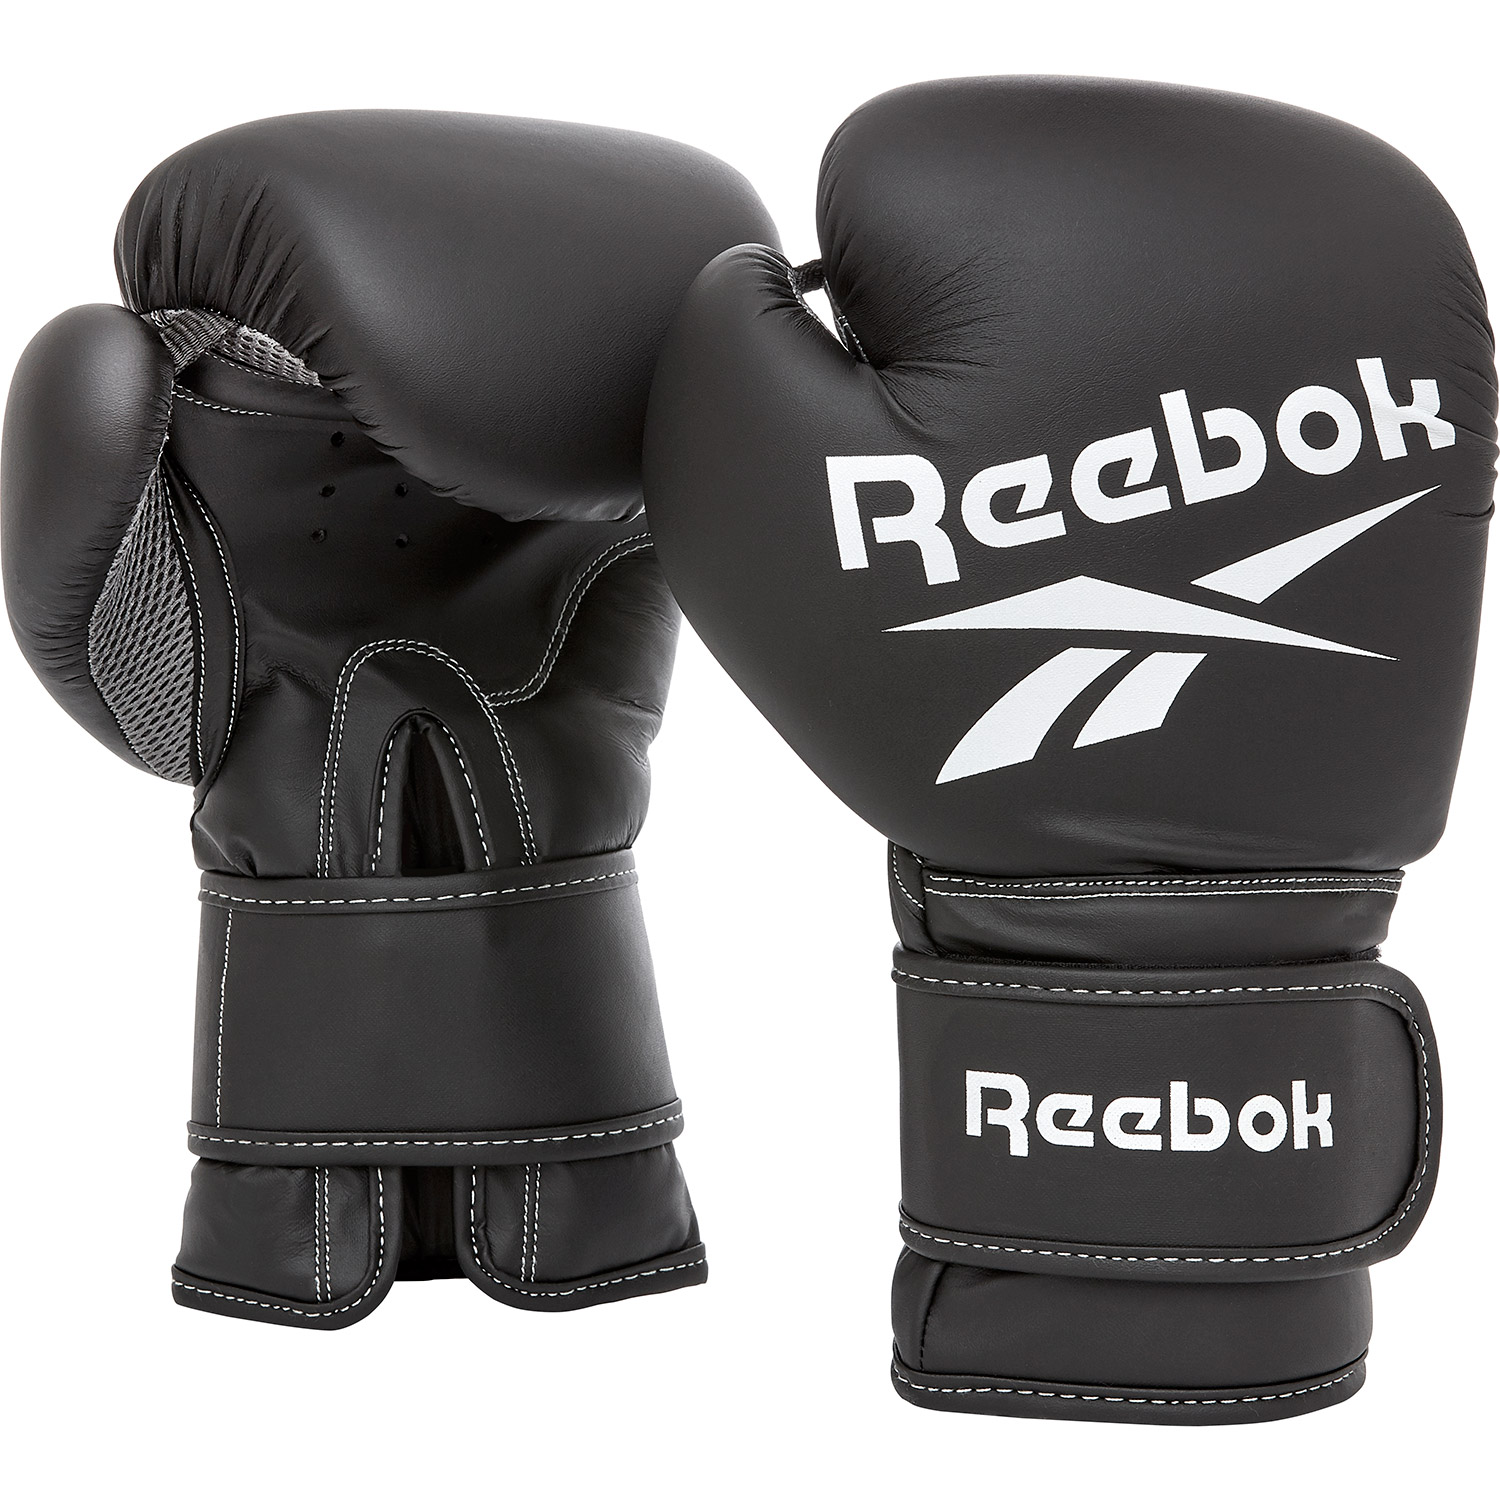 Reebok boxing gloves black 12 oz